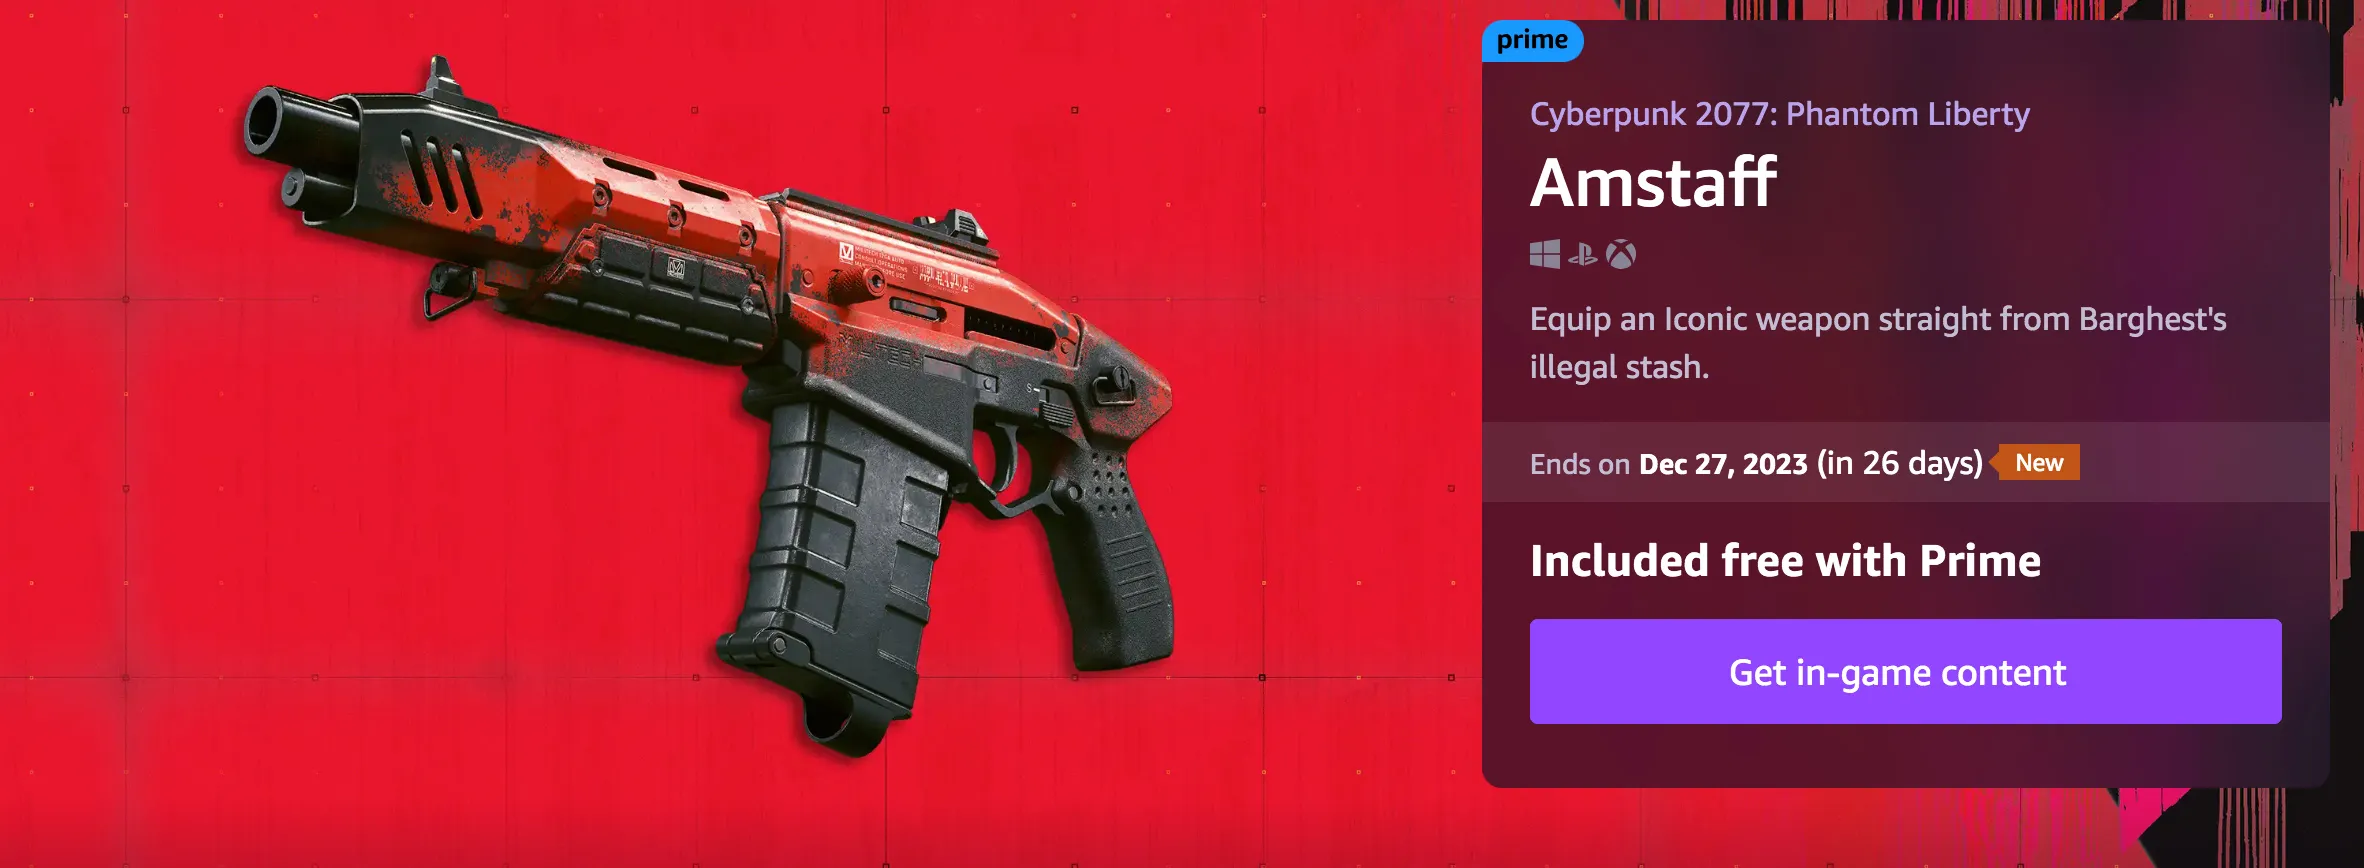 Free Amstaff Shotgun with Amazon Prime.jpg